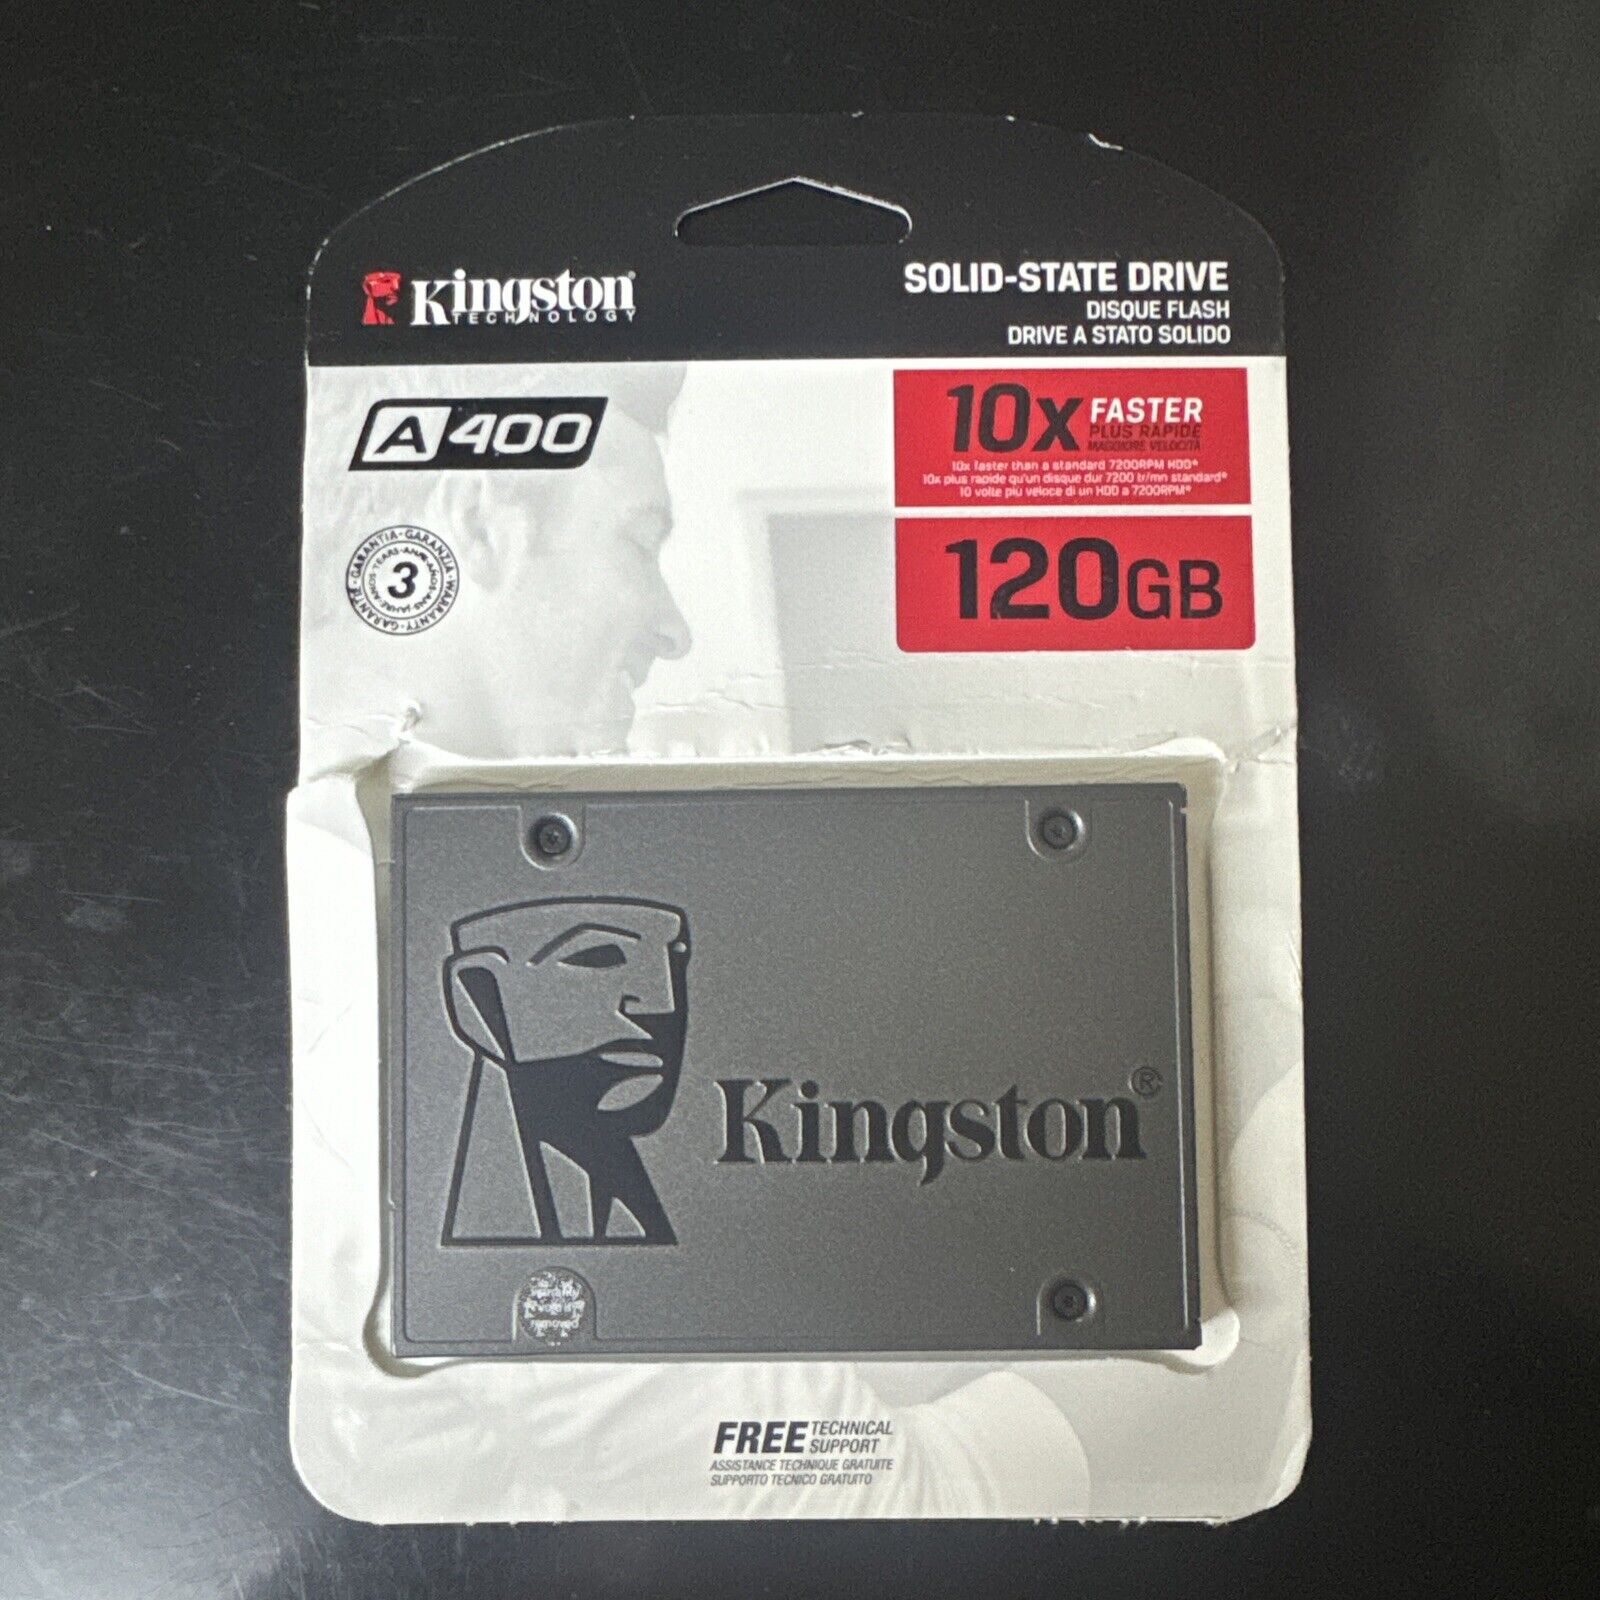 Kingston SSD 120GB SATA III 2.5” Internal Solid State Drive Notebook Desktop